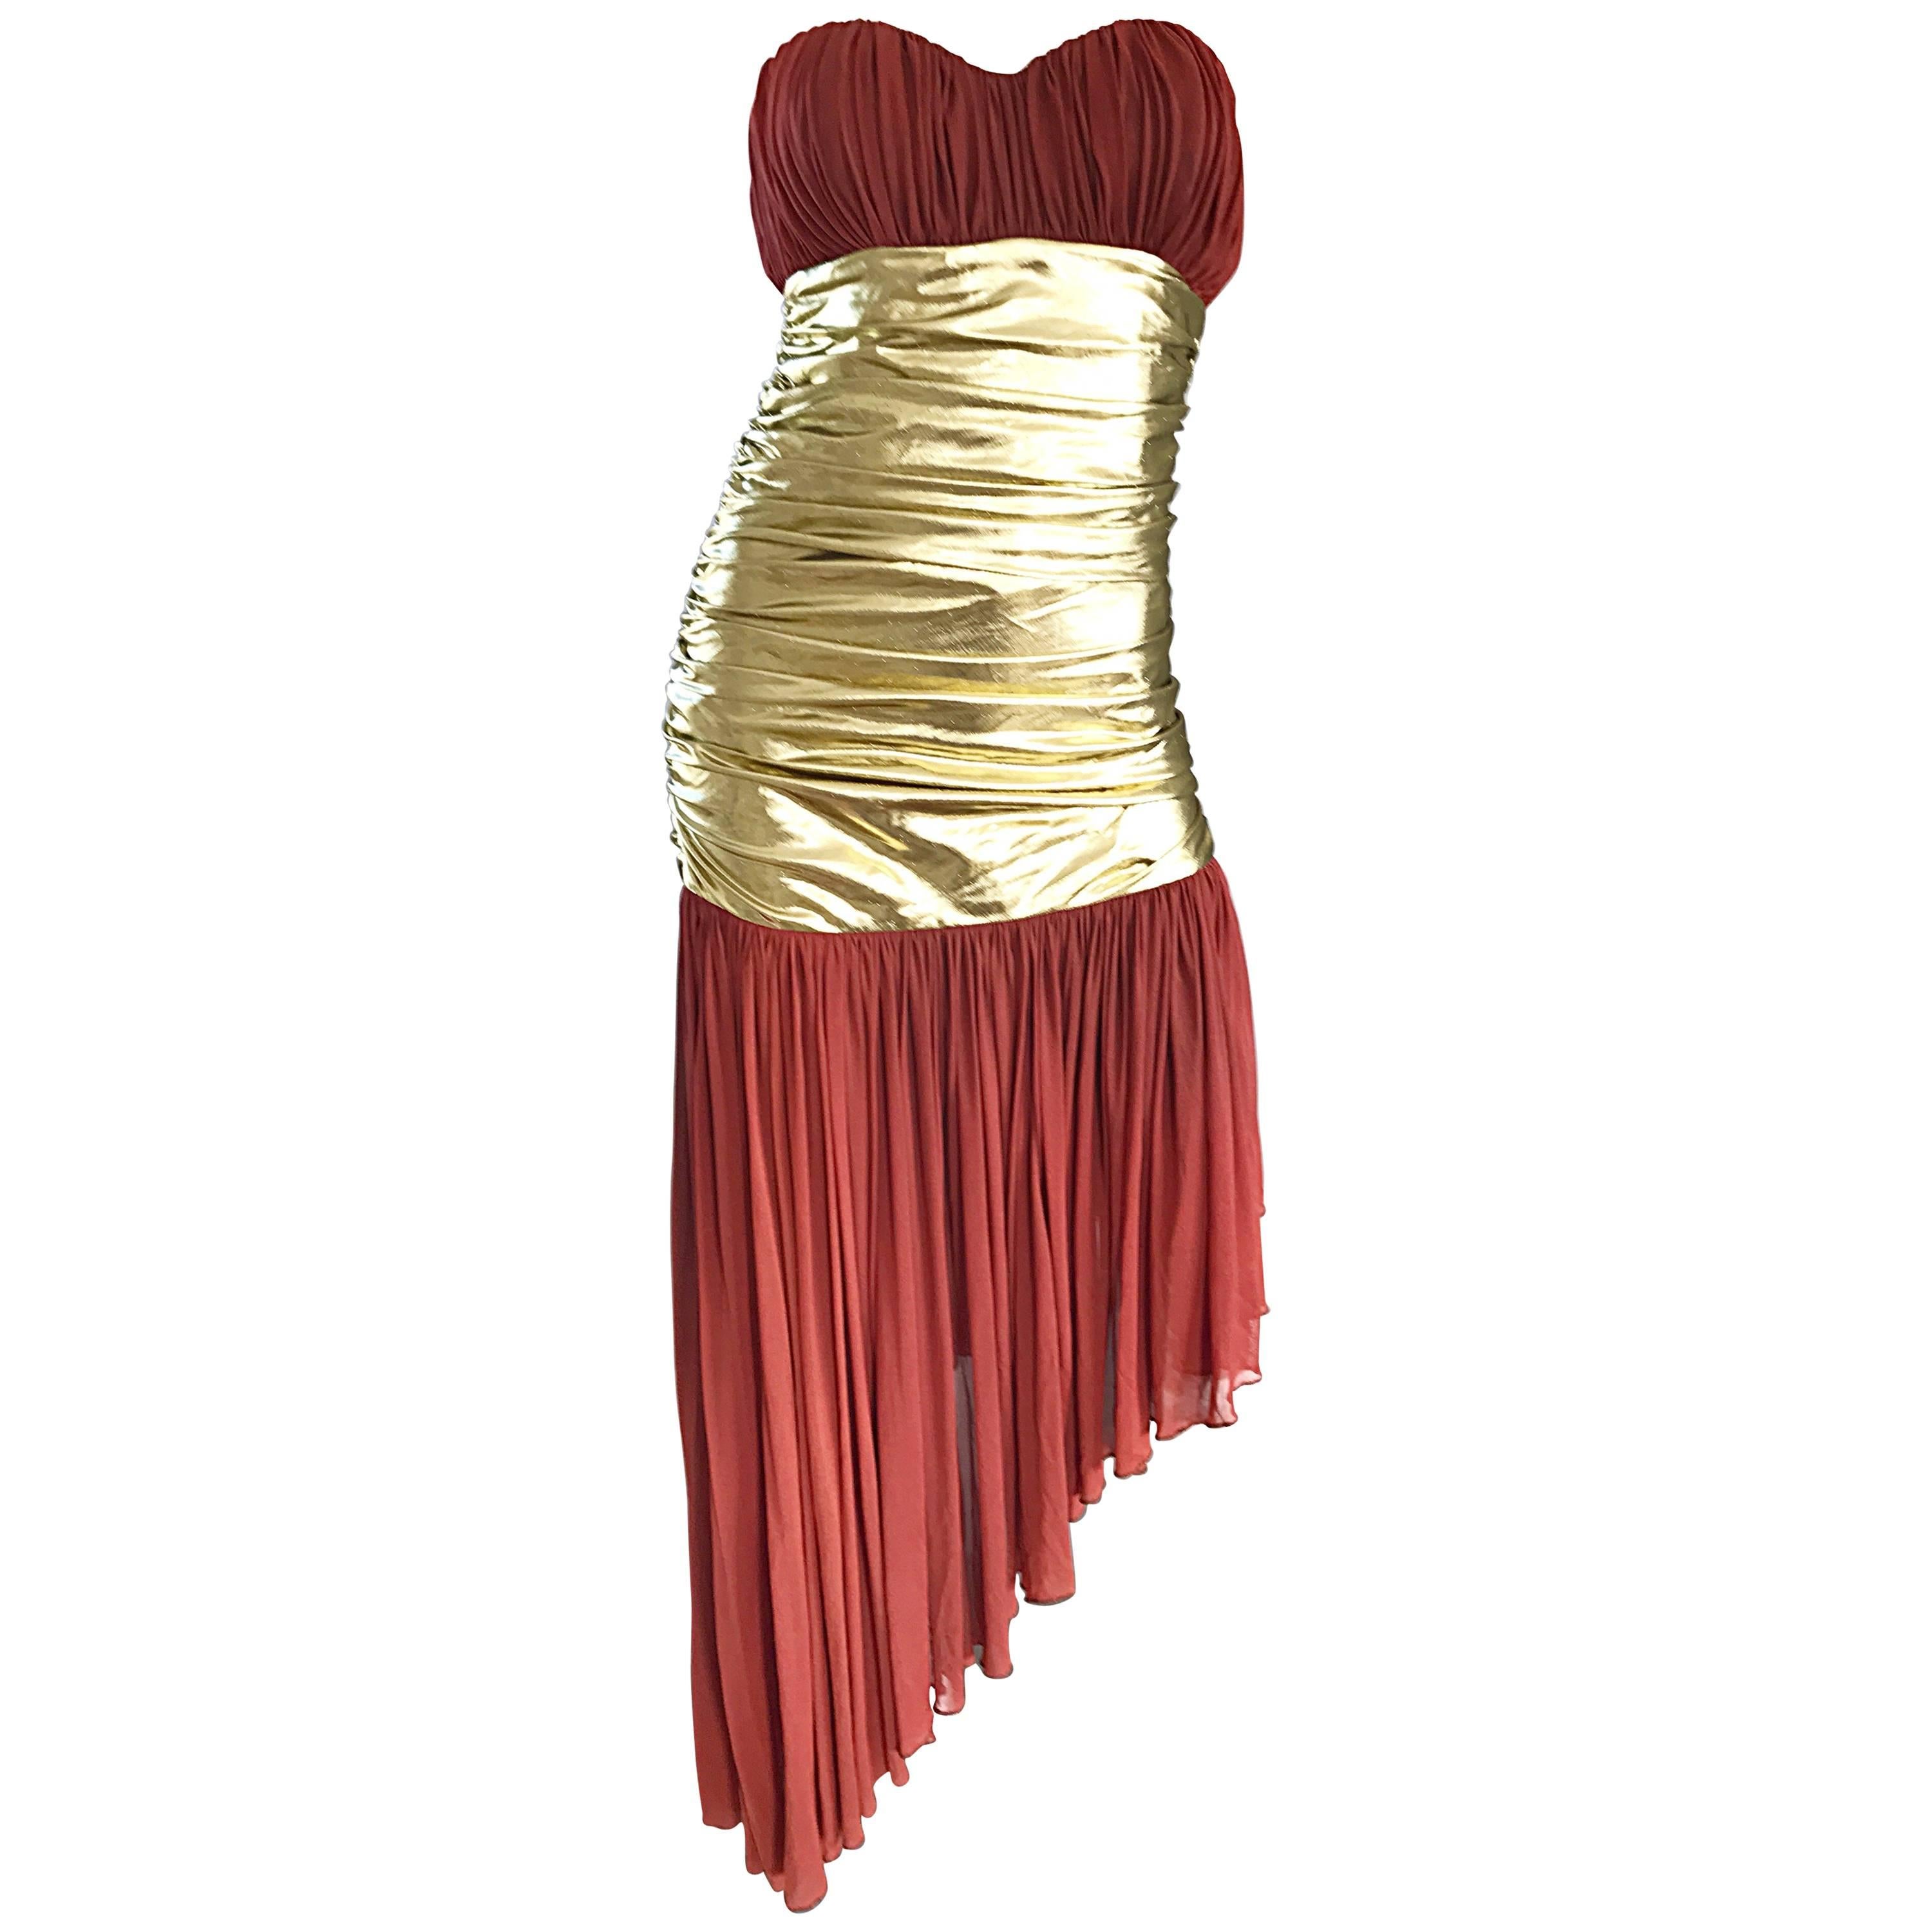 Vintage Angelo Tarlazzi Couture Metallic Gold + Rust Strapless Avant Garde Dress